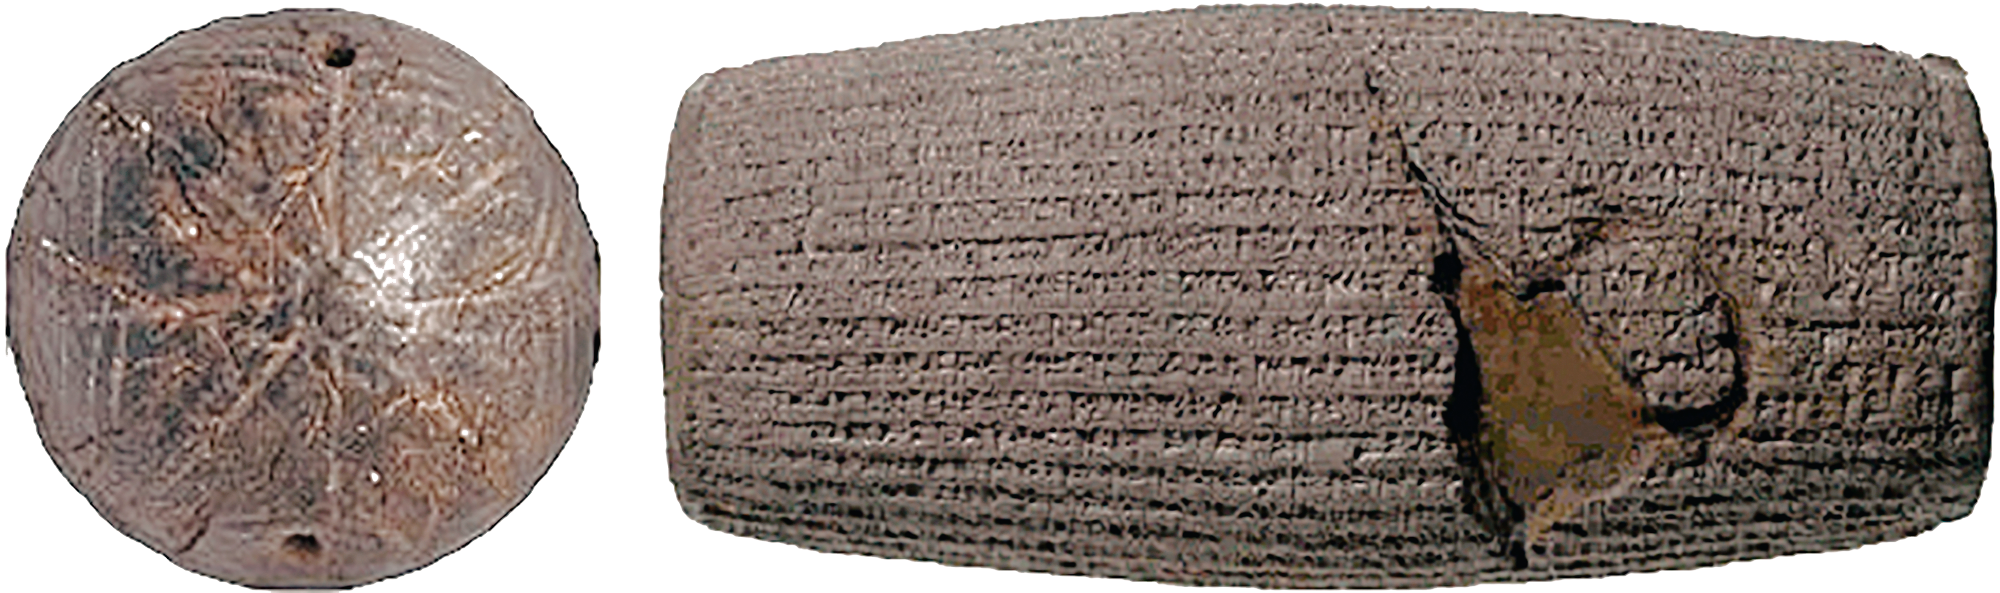 Artificial eye ball from Shahr-e Sukhteh Cyrus Cylinder